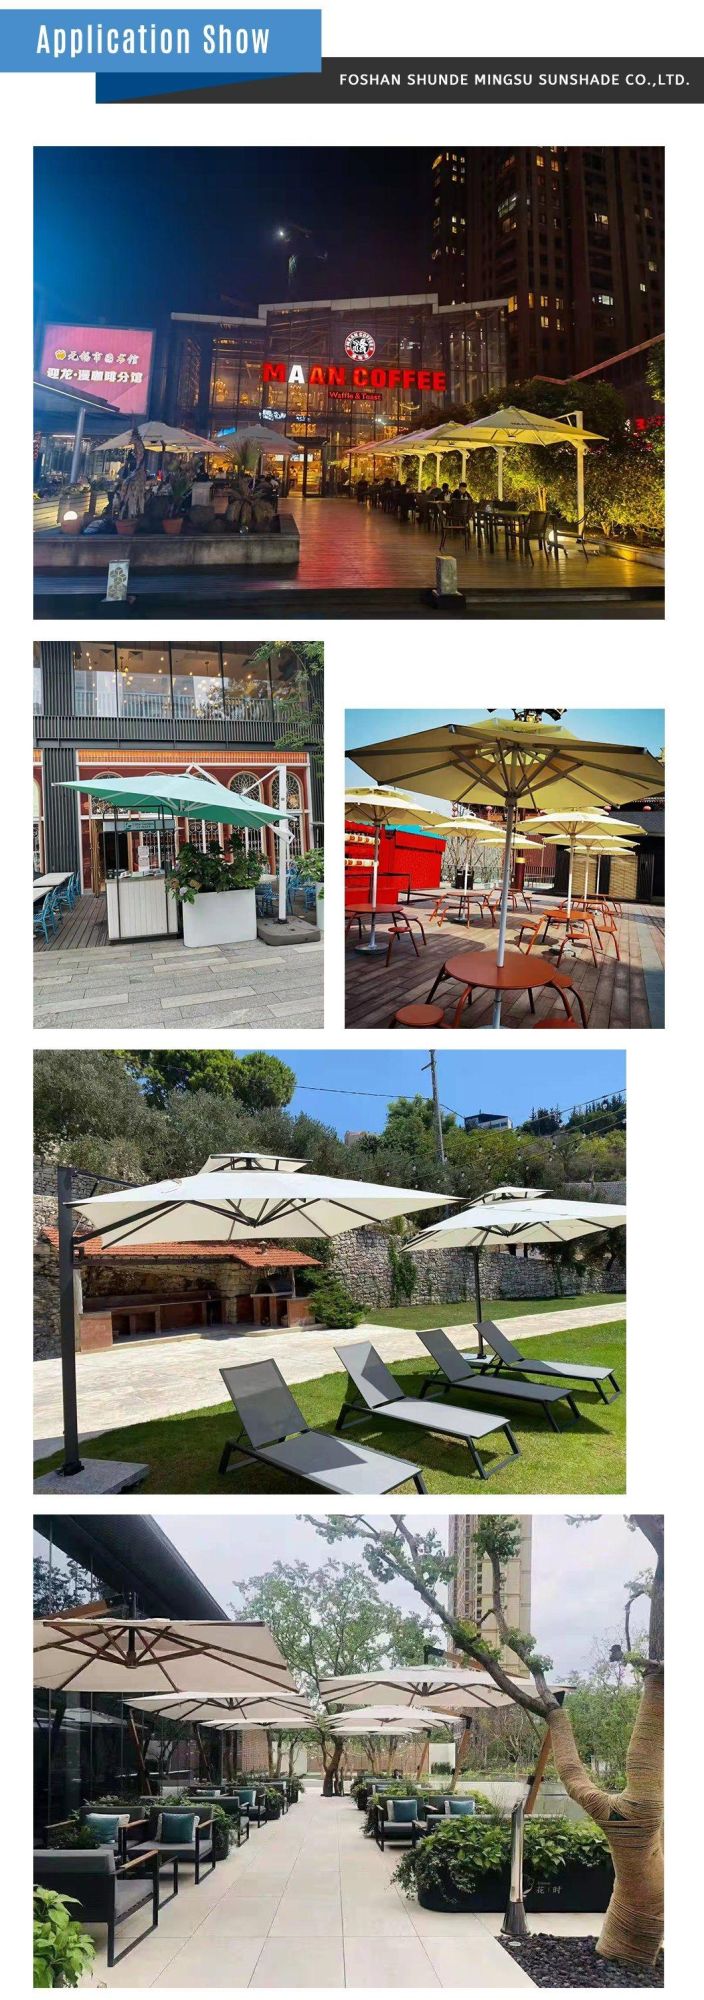 3*3m Luxury Square Shape Big Roma Umbrella Rotatable Outdoor Garden Patio Cantilever Parasol Umbrella